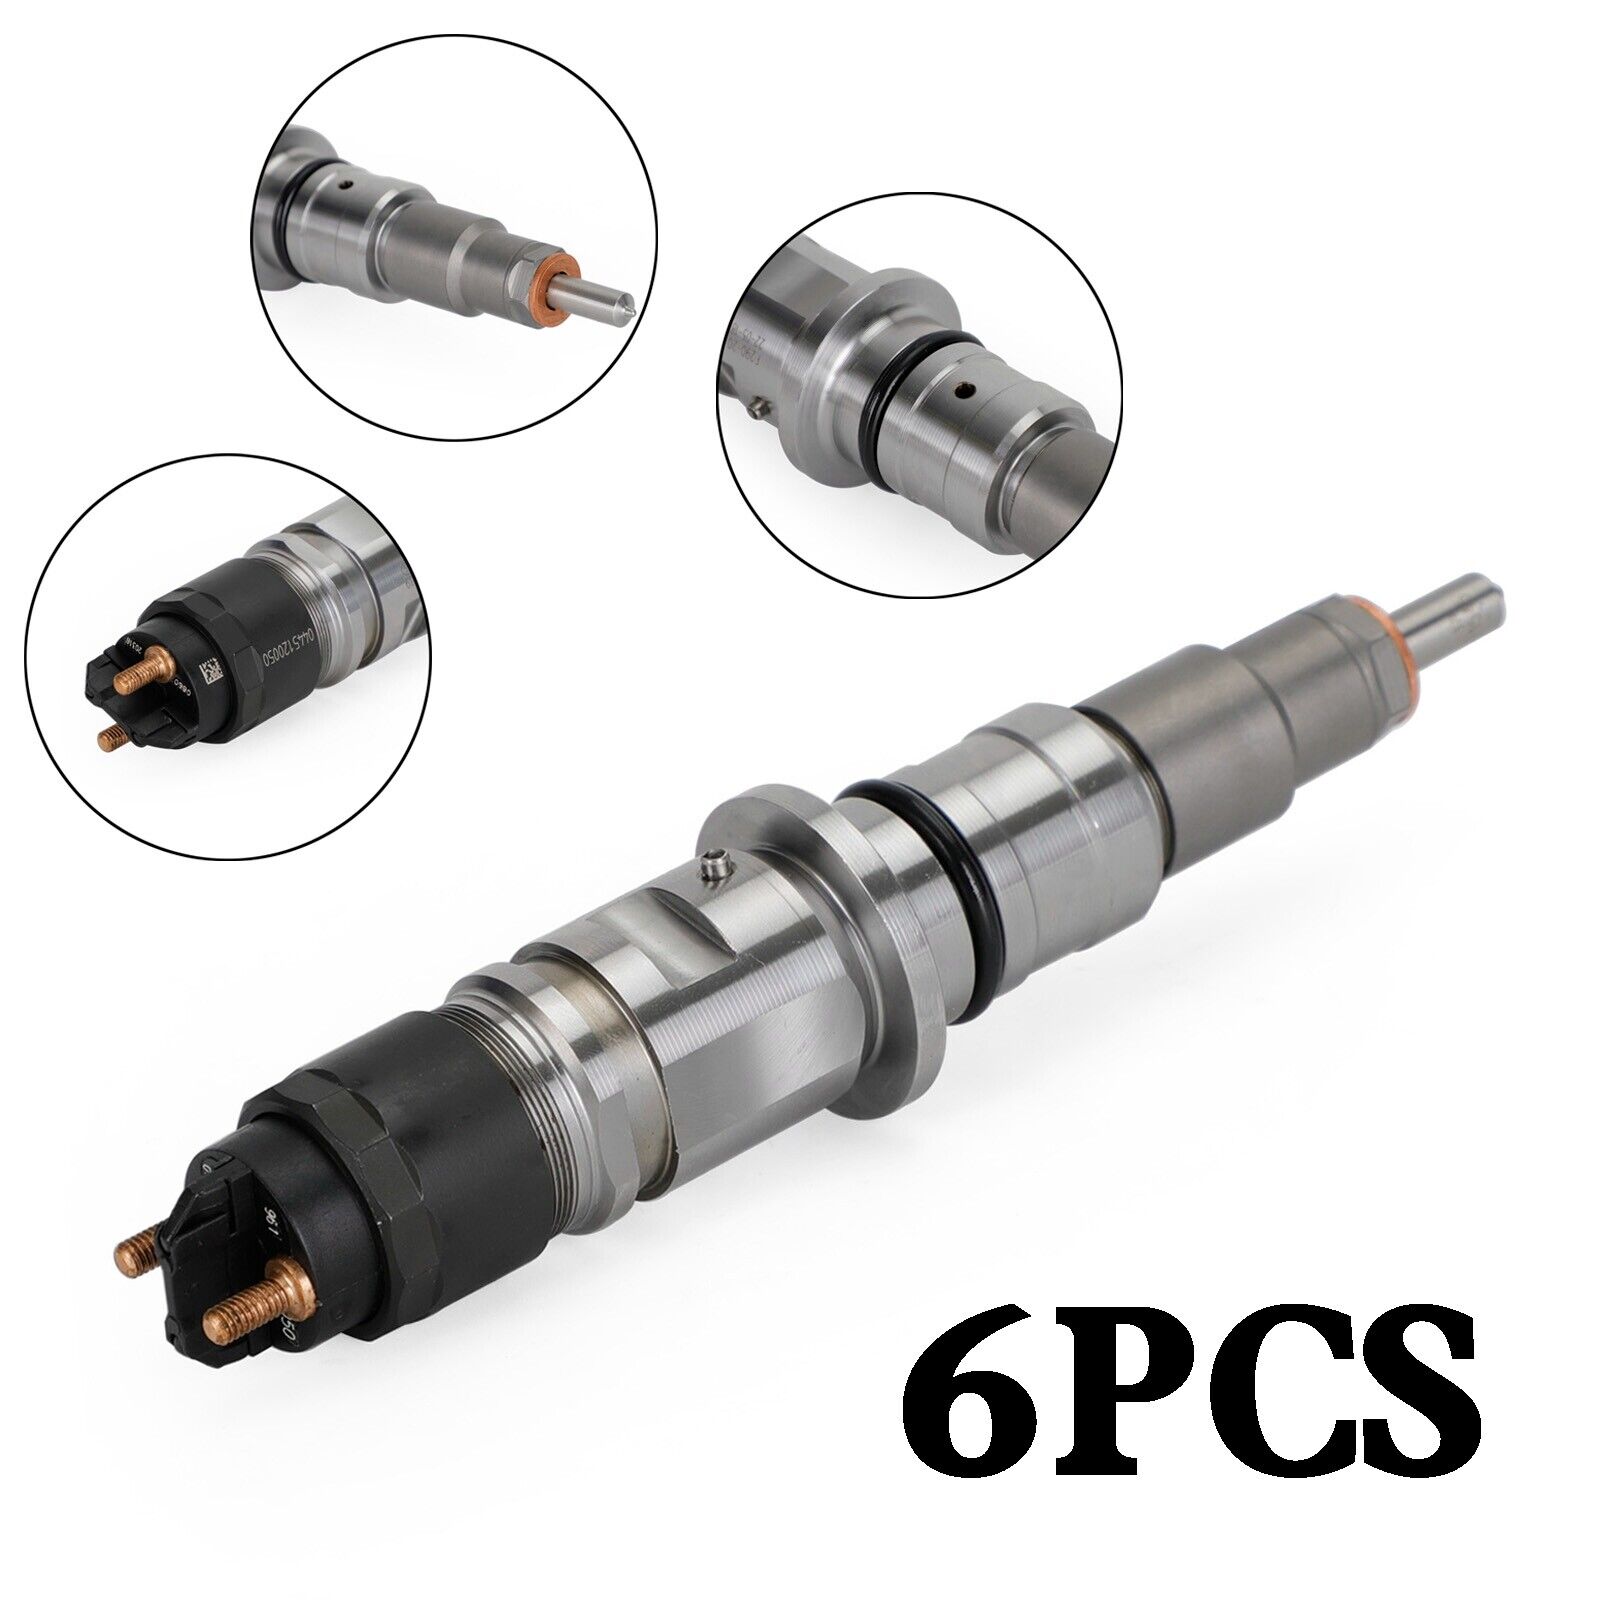 6PCS Common Rail Fuel Injector Diesel For Dodge Cummins 6.7L 13-18 0986435574